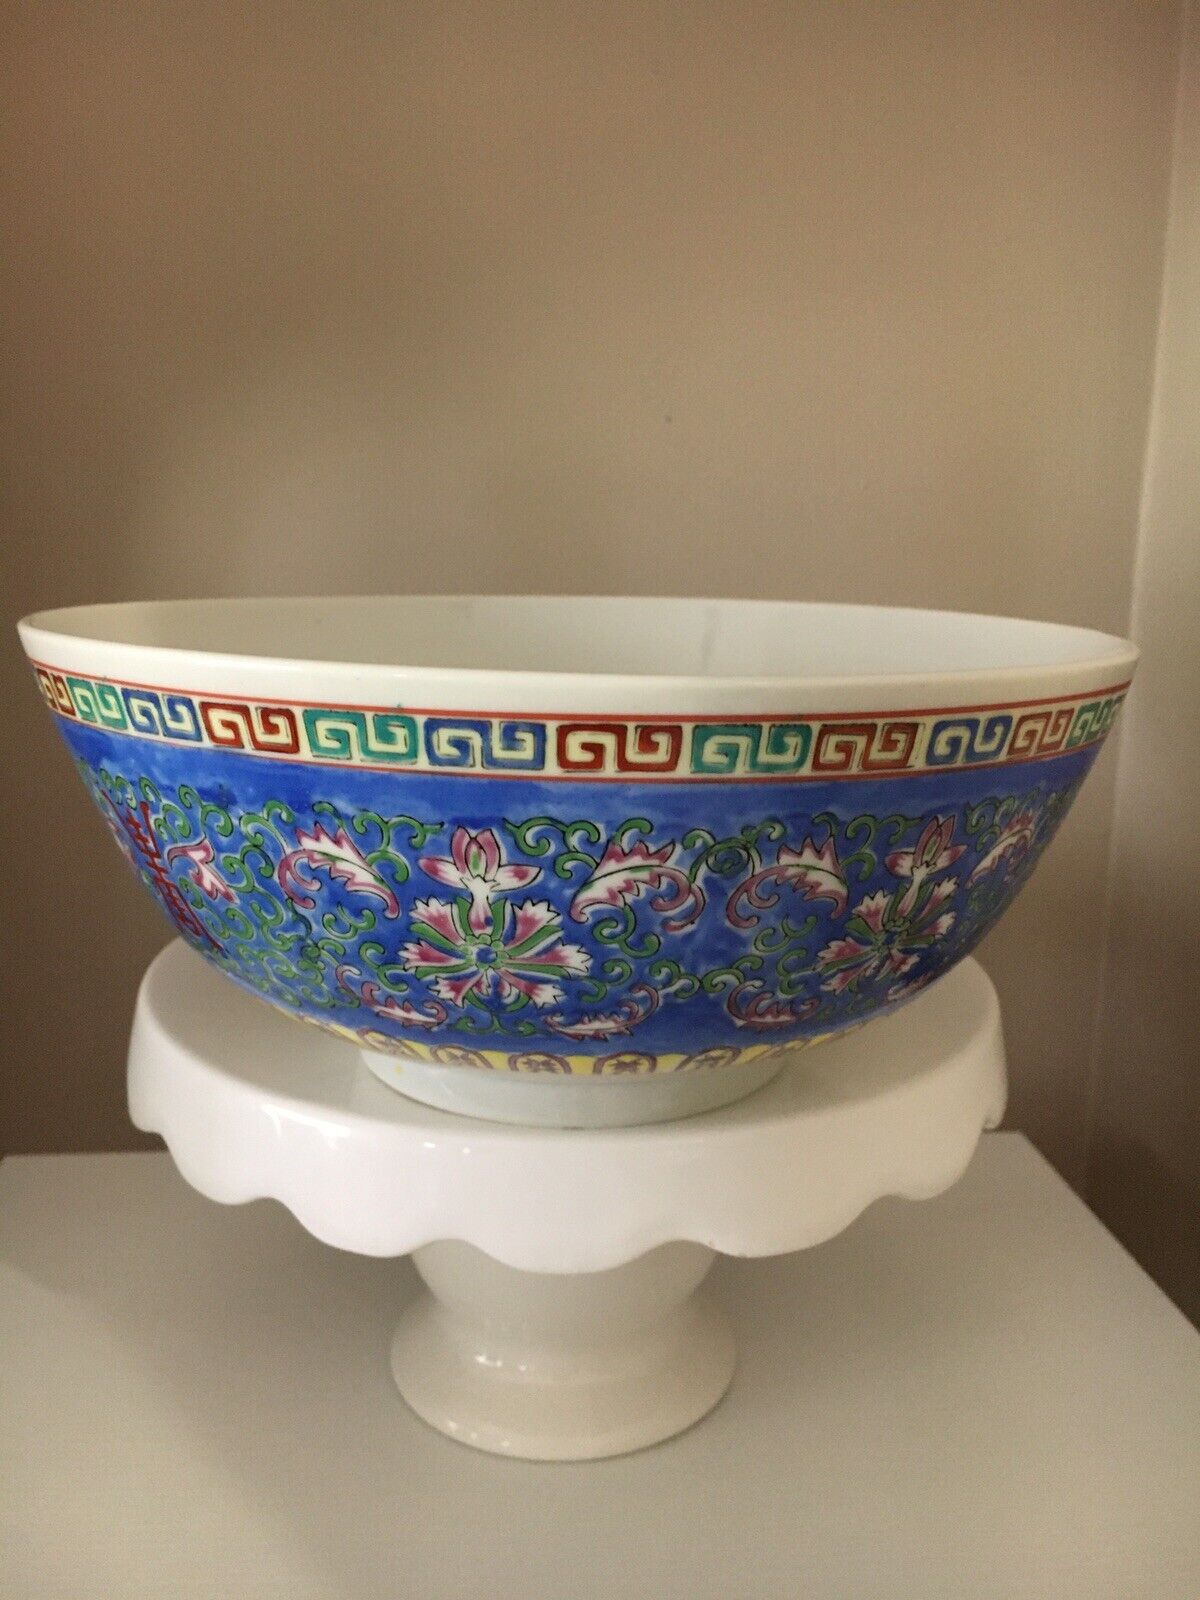 Wony Ltd. Japanese Serving Bowl 9” Diameter Multi Color Painted Porcelain